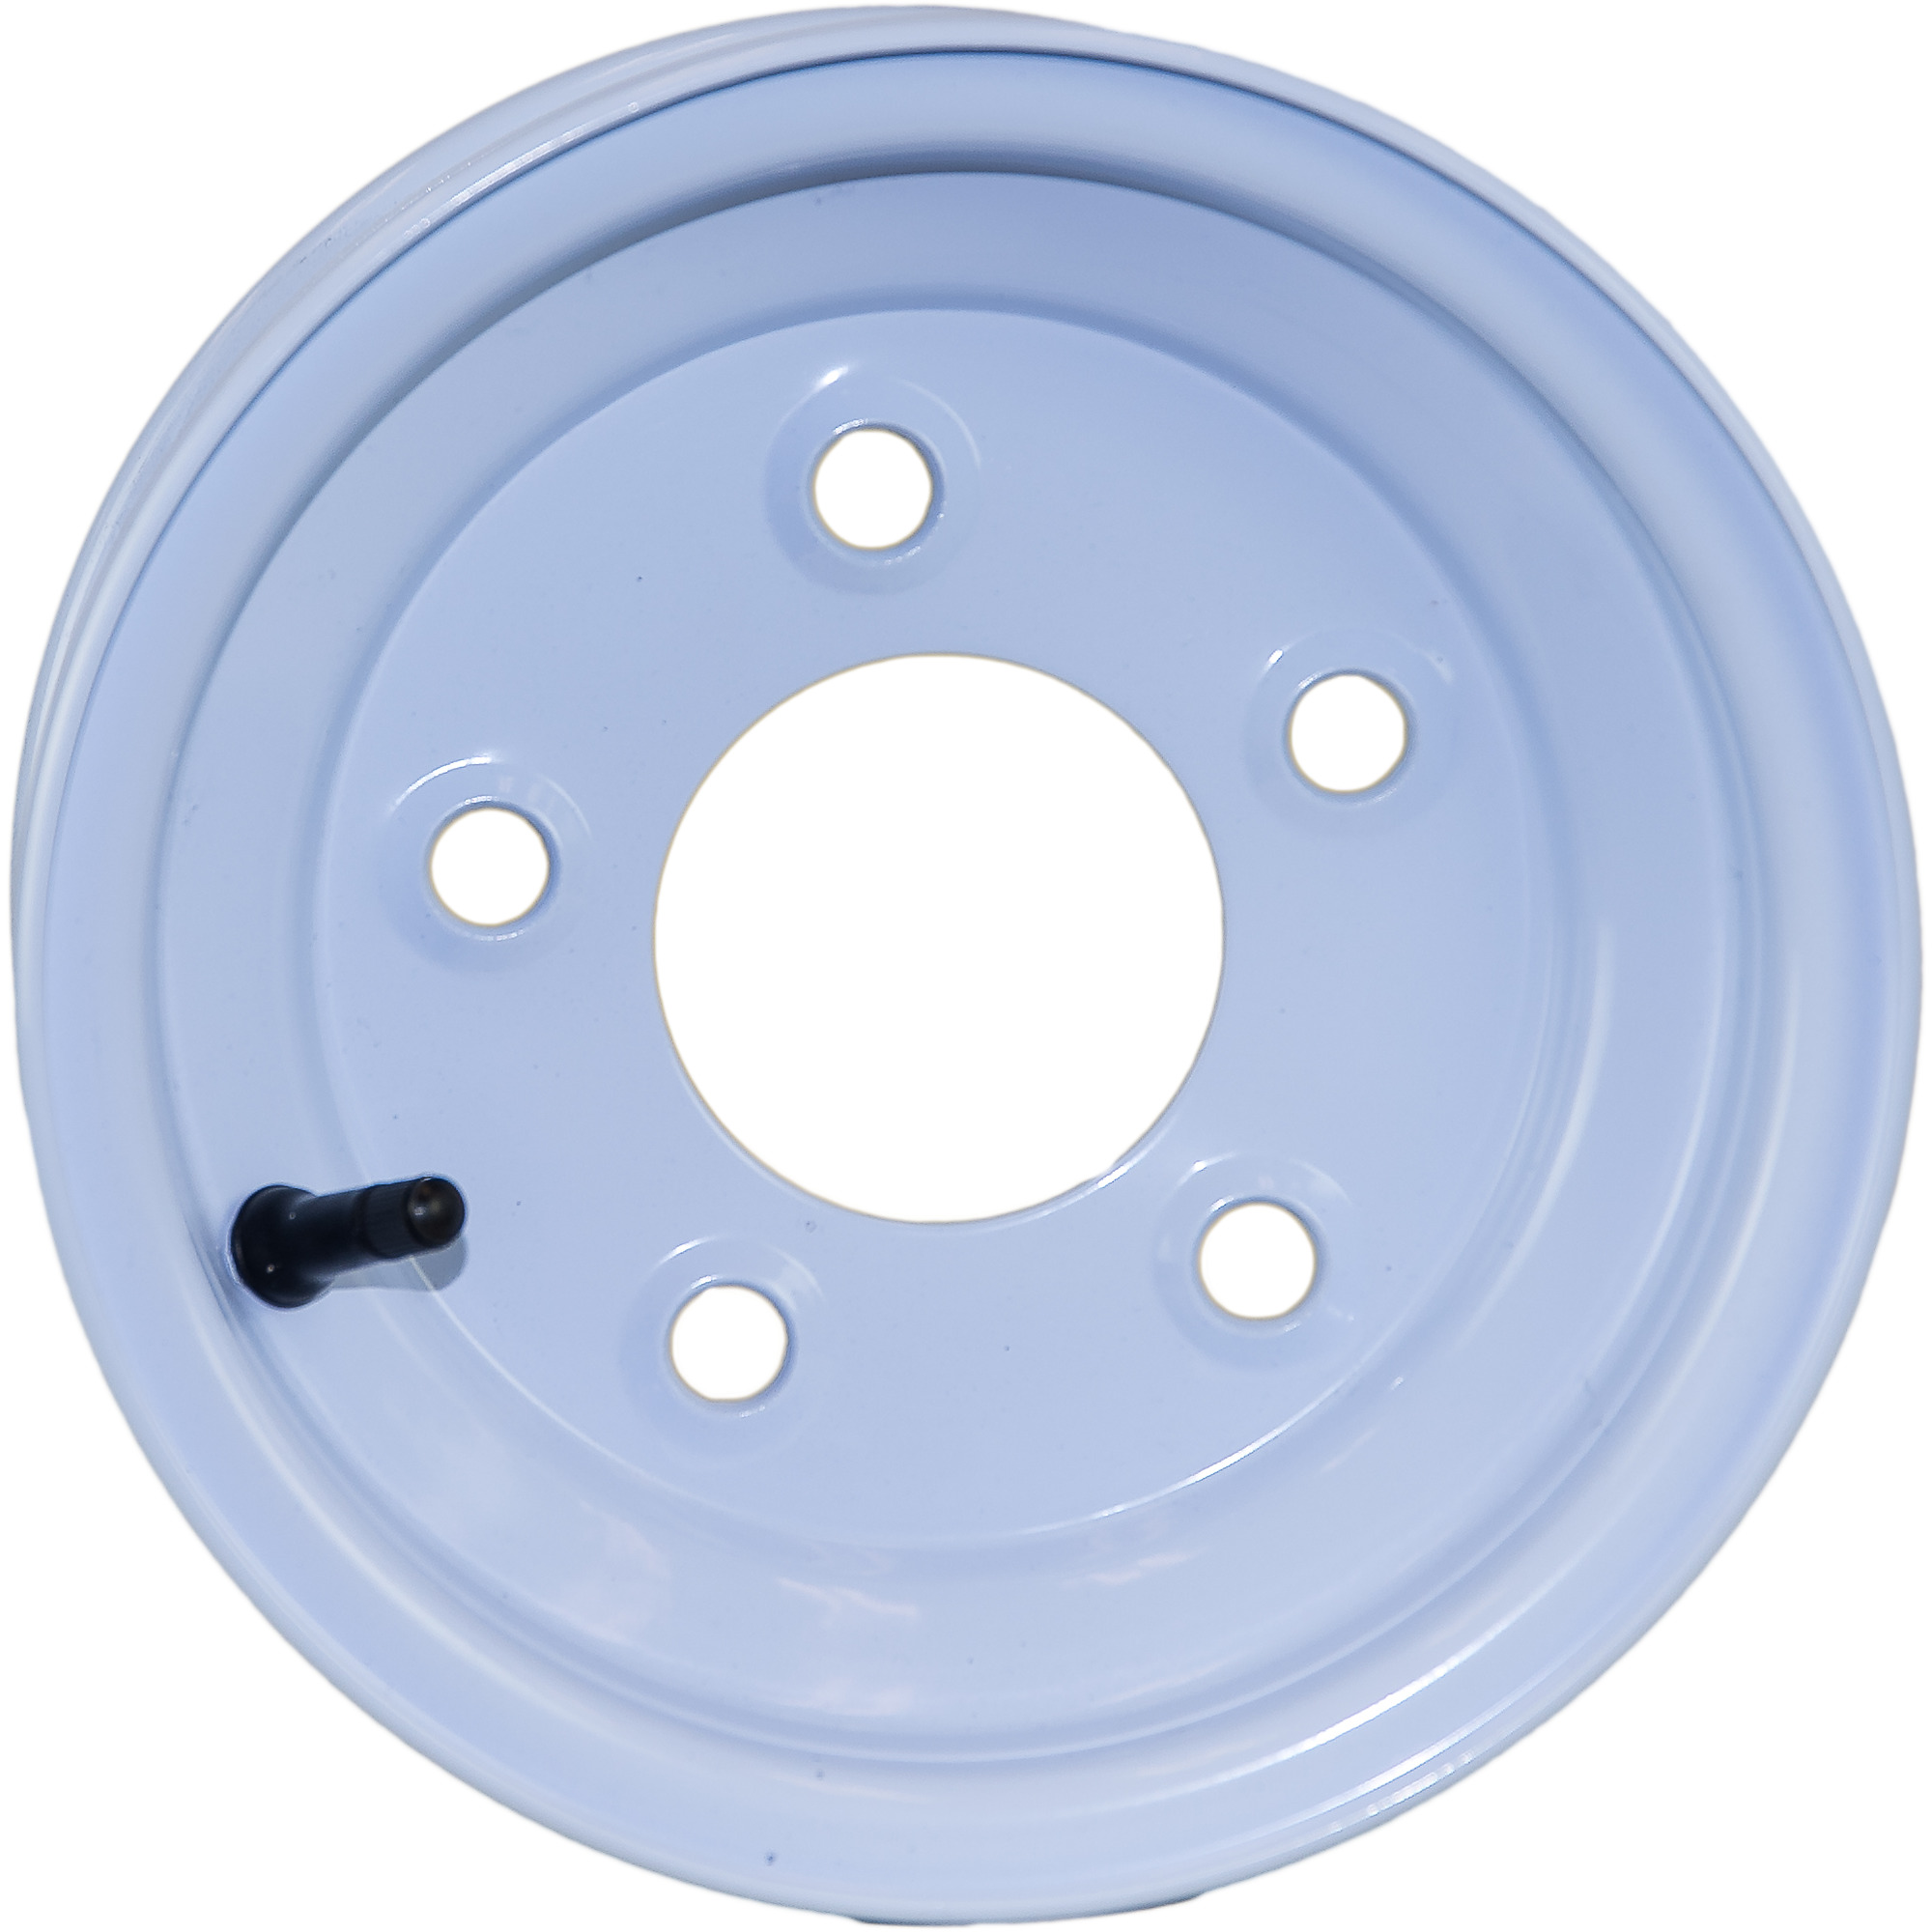 HI-RUN, Steel Wheel for Highway Trailer, Tire Size 8X3.75 5-4.5, Bolt Holes (qty.) 5, Model NB2002